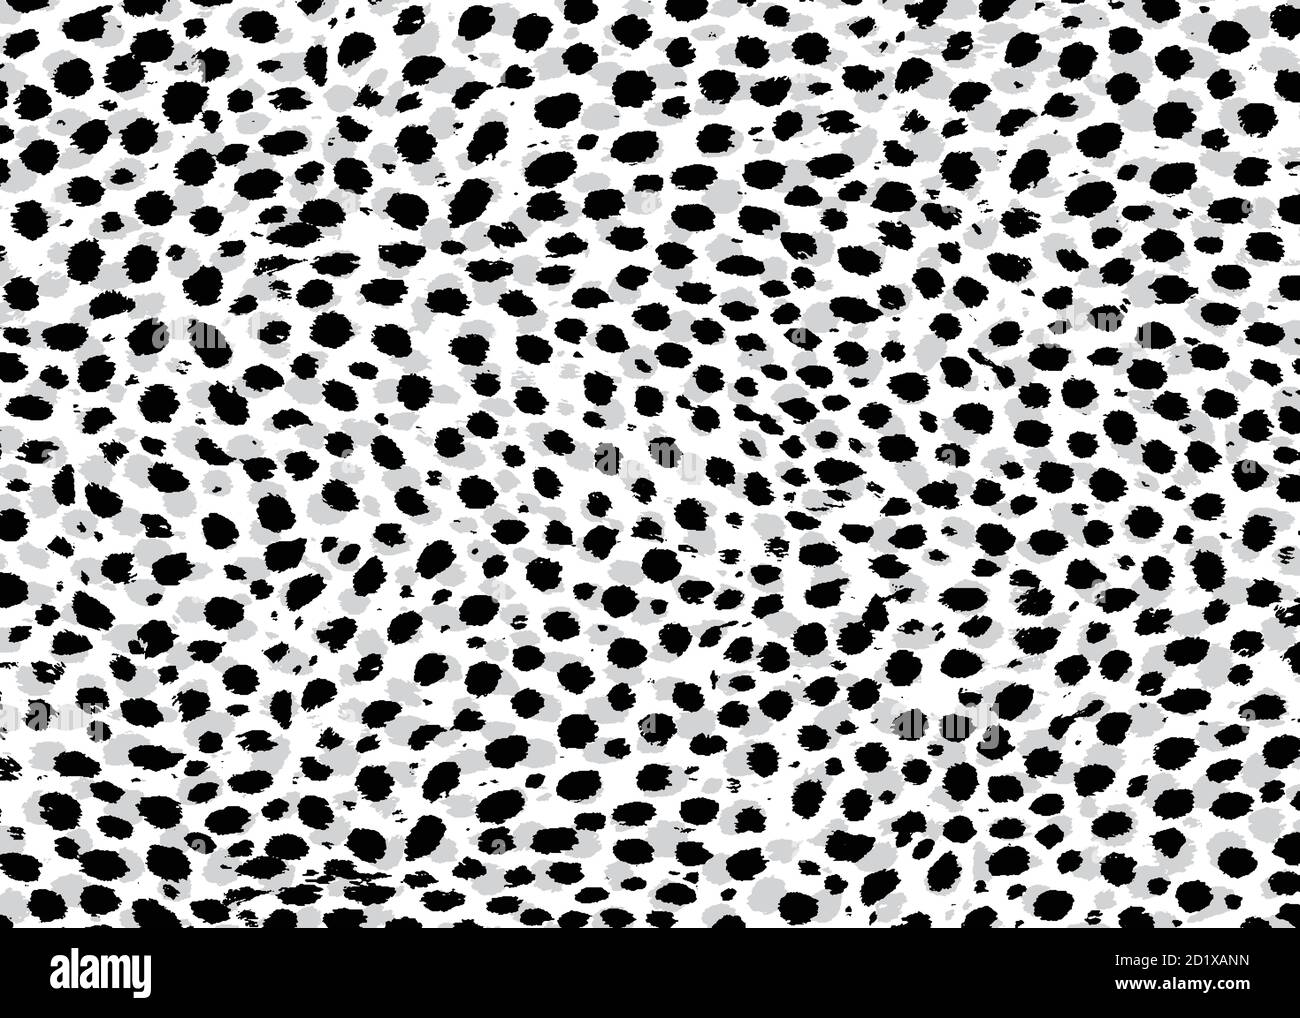 Cheetah skin pattern design. Cheetah spots print vector illustration background. Wildlife fur skin design illustration for print, web, home decor, fas Stock Vector